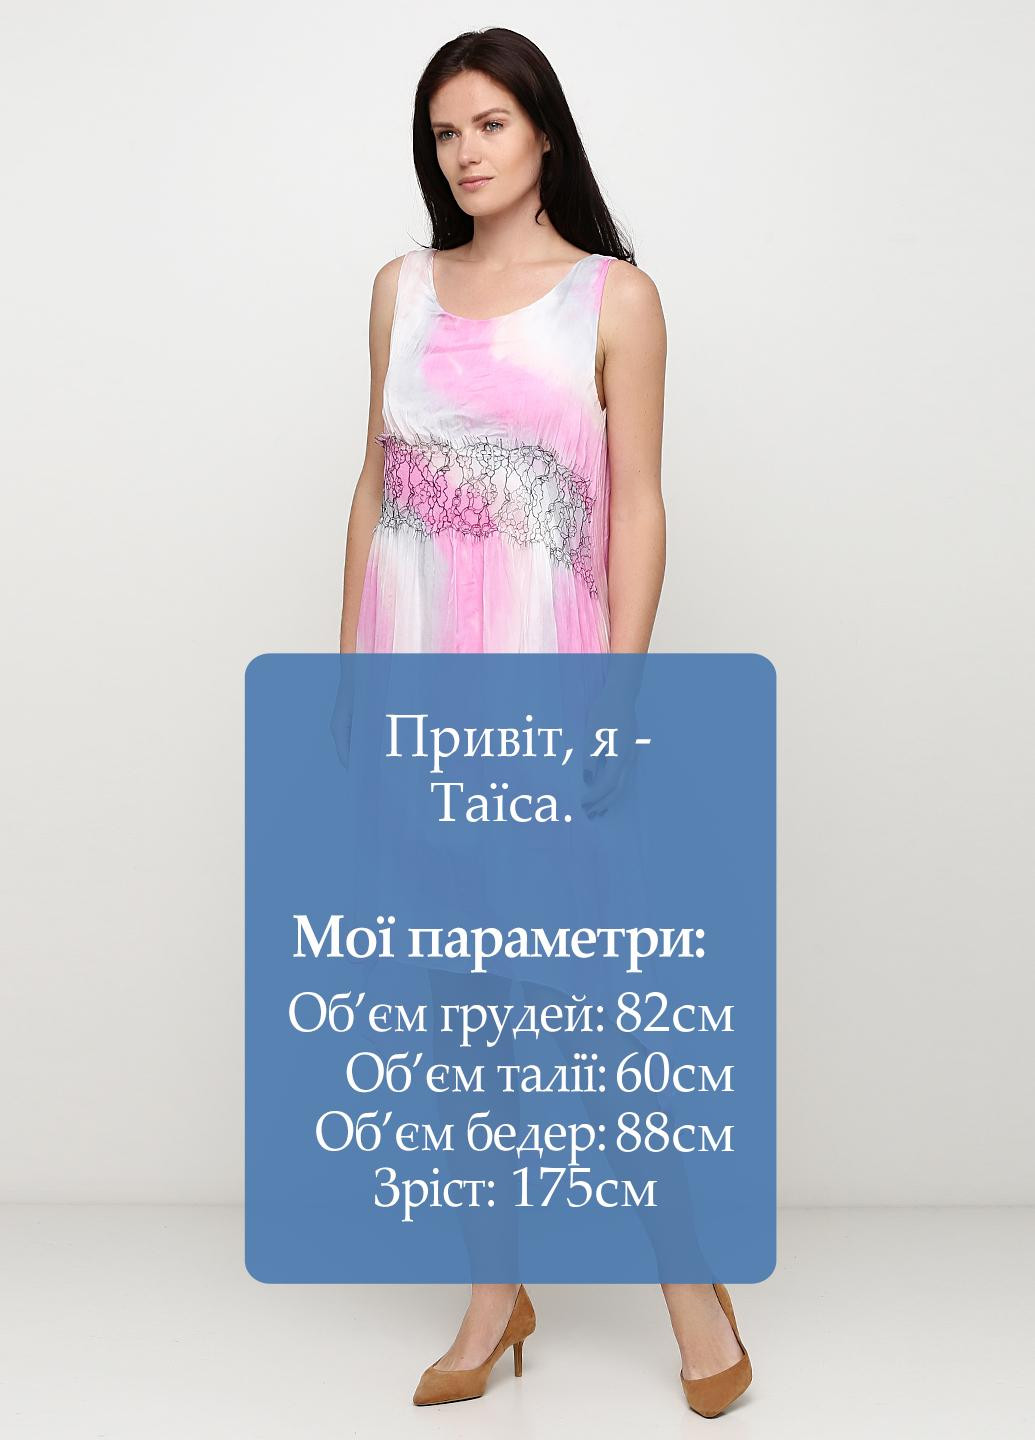 Розовое кэжуал платье а-силуэт Made in Italy градиентное ("омбре")